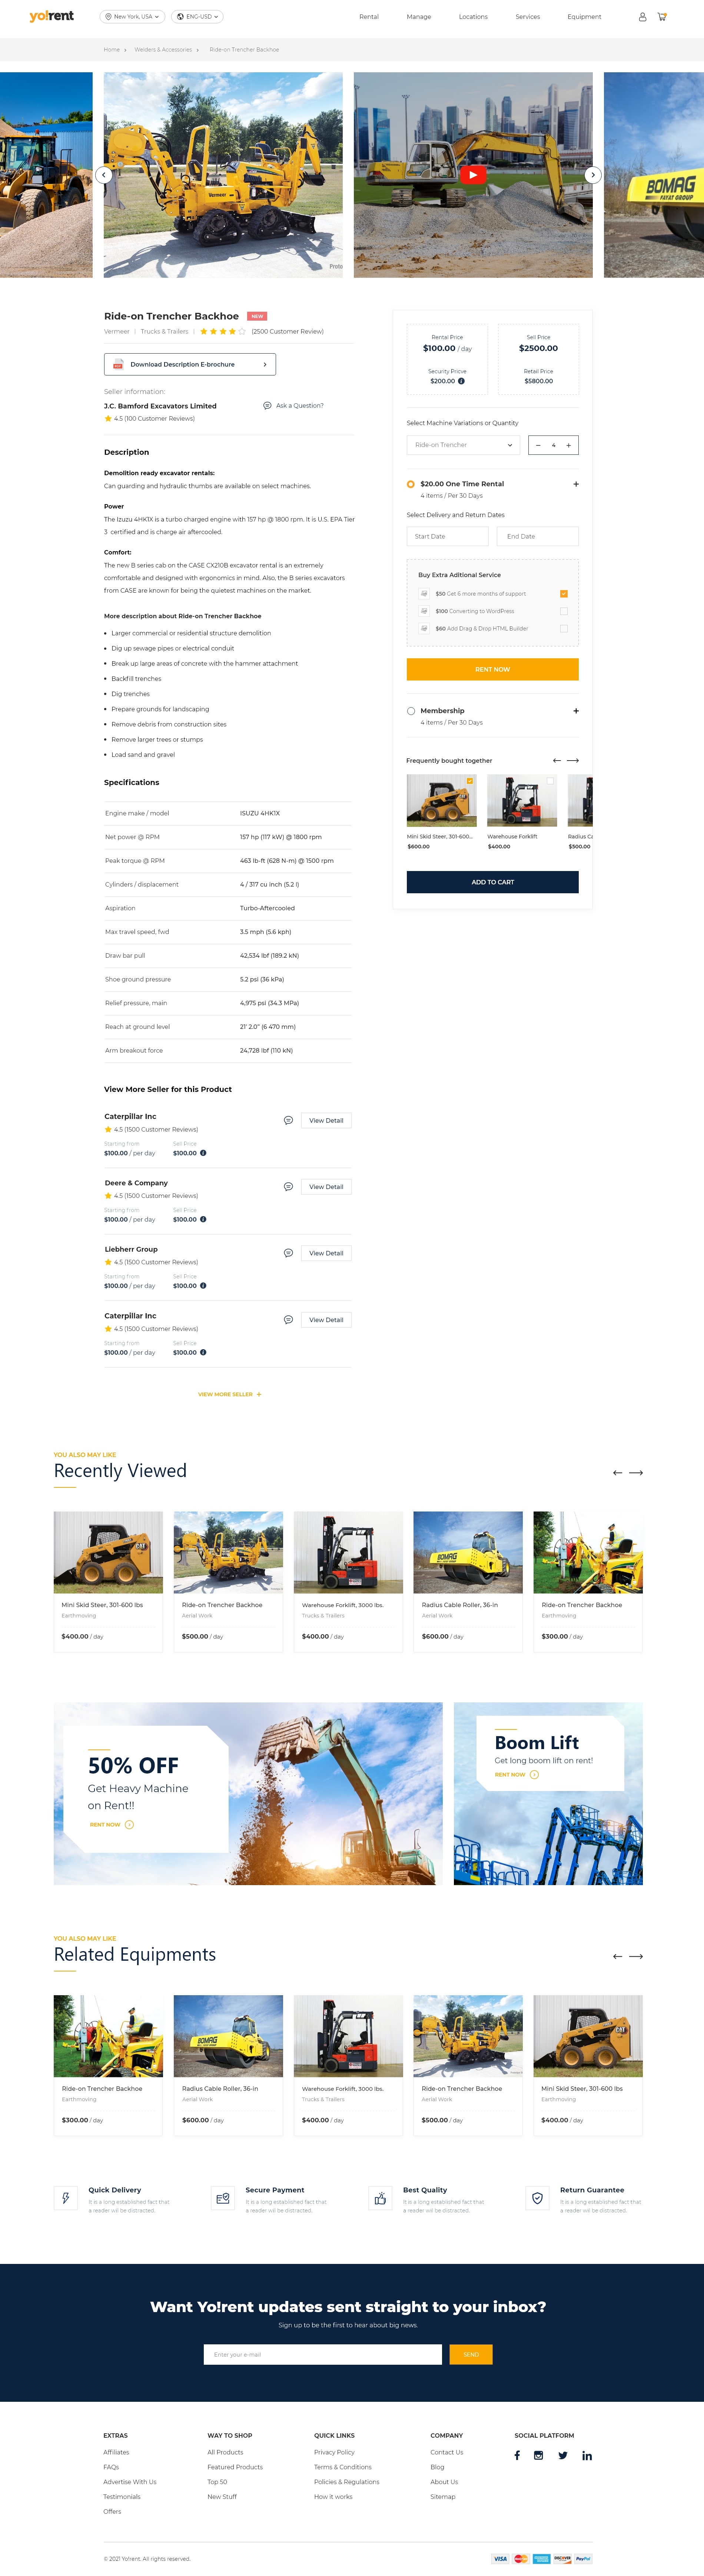 Equipment rental detail page design